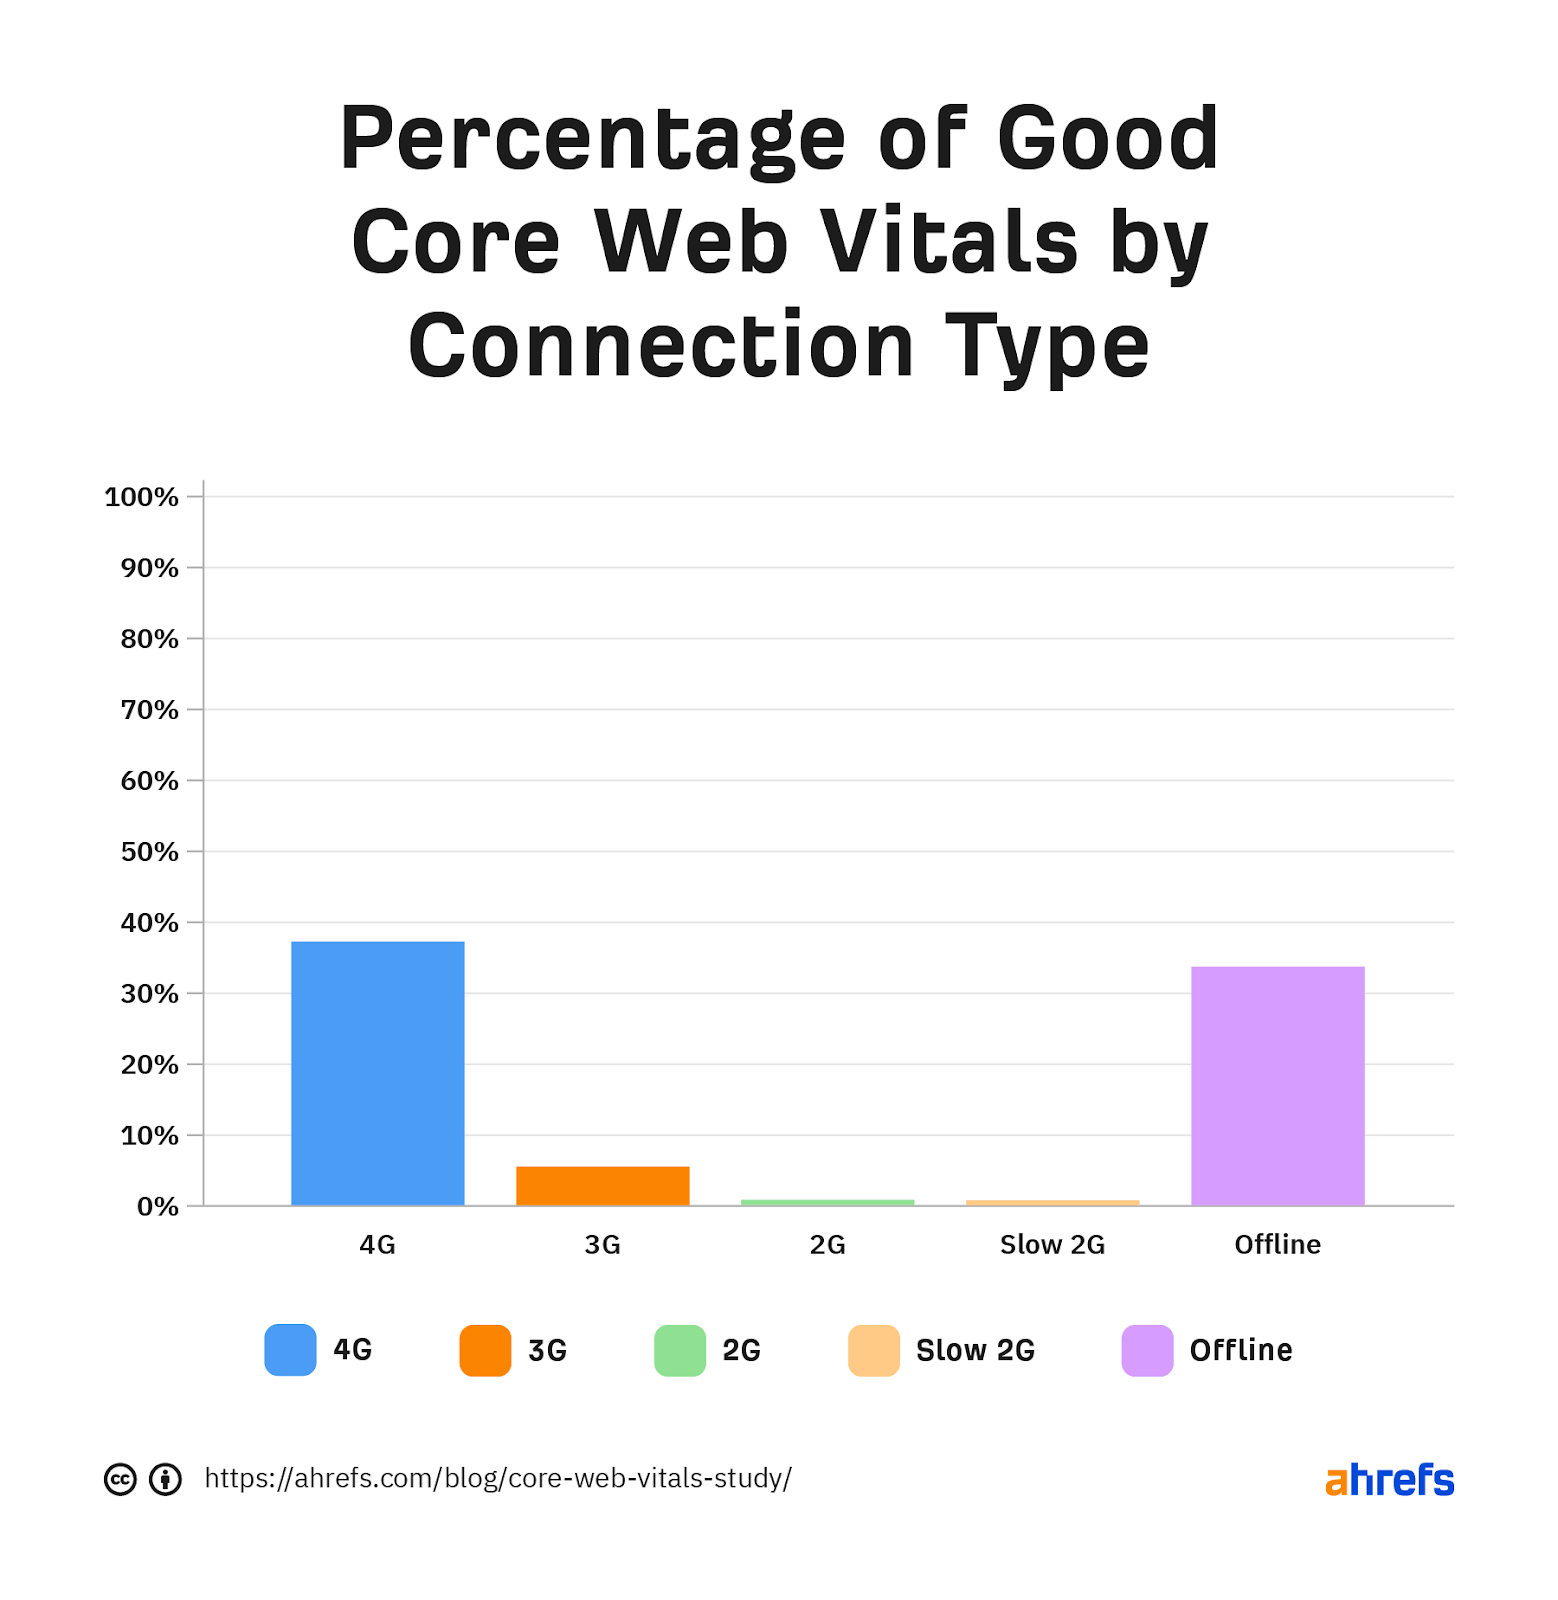 Chart showing the percentage of Core Web Vital vouchers per connection